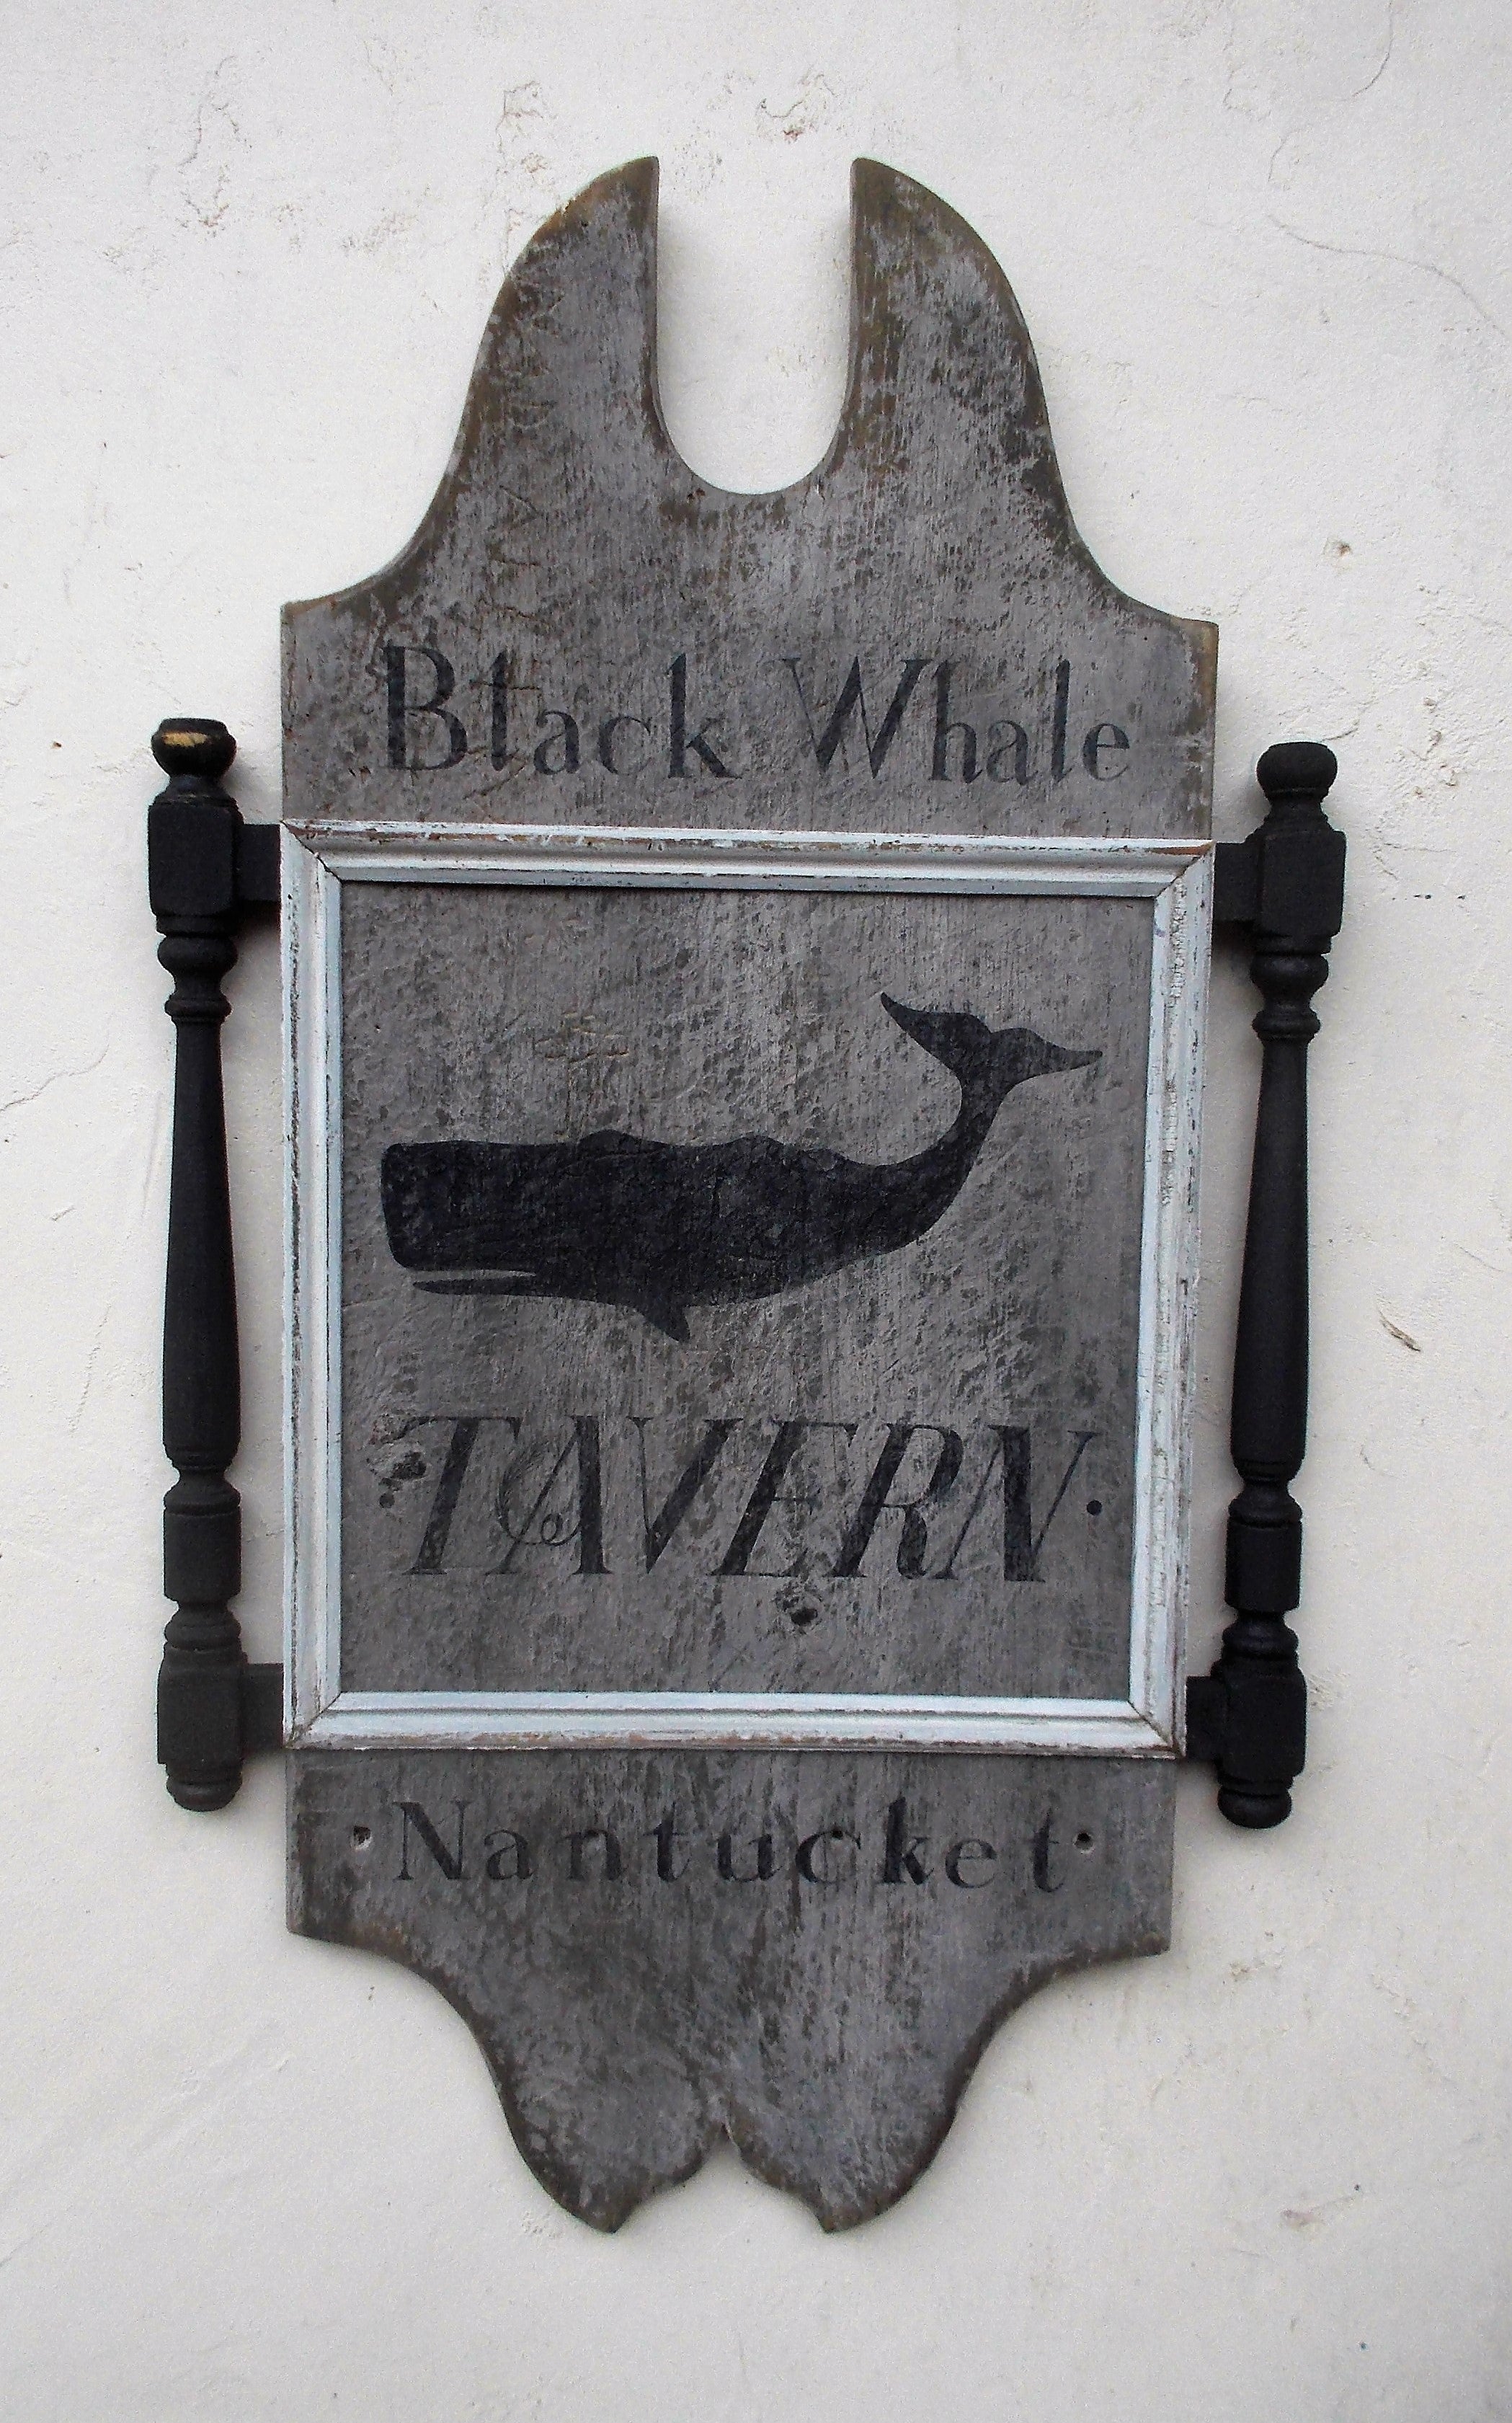 Black Whale Tavern